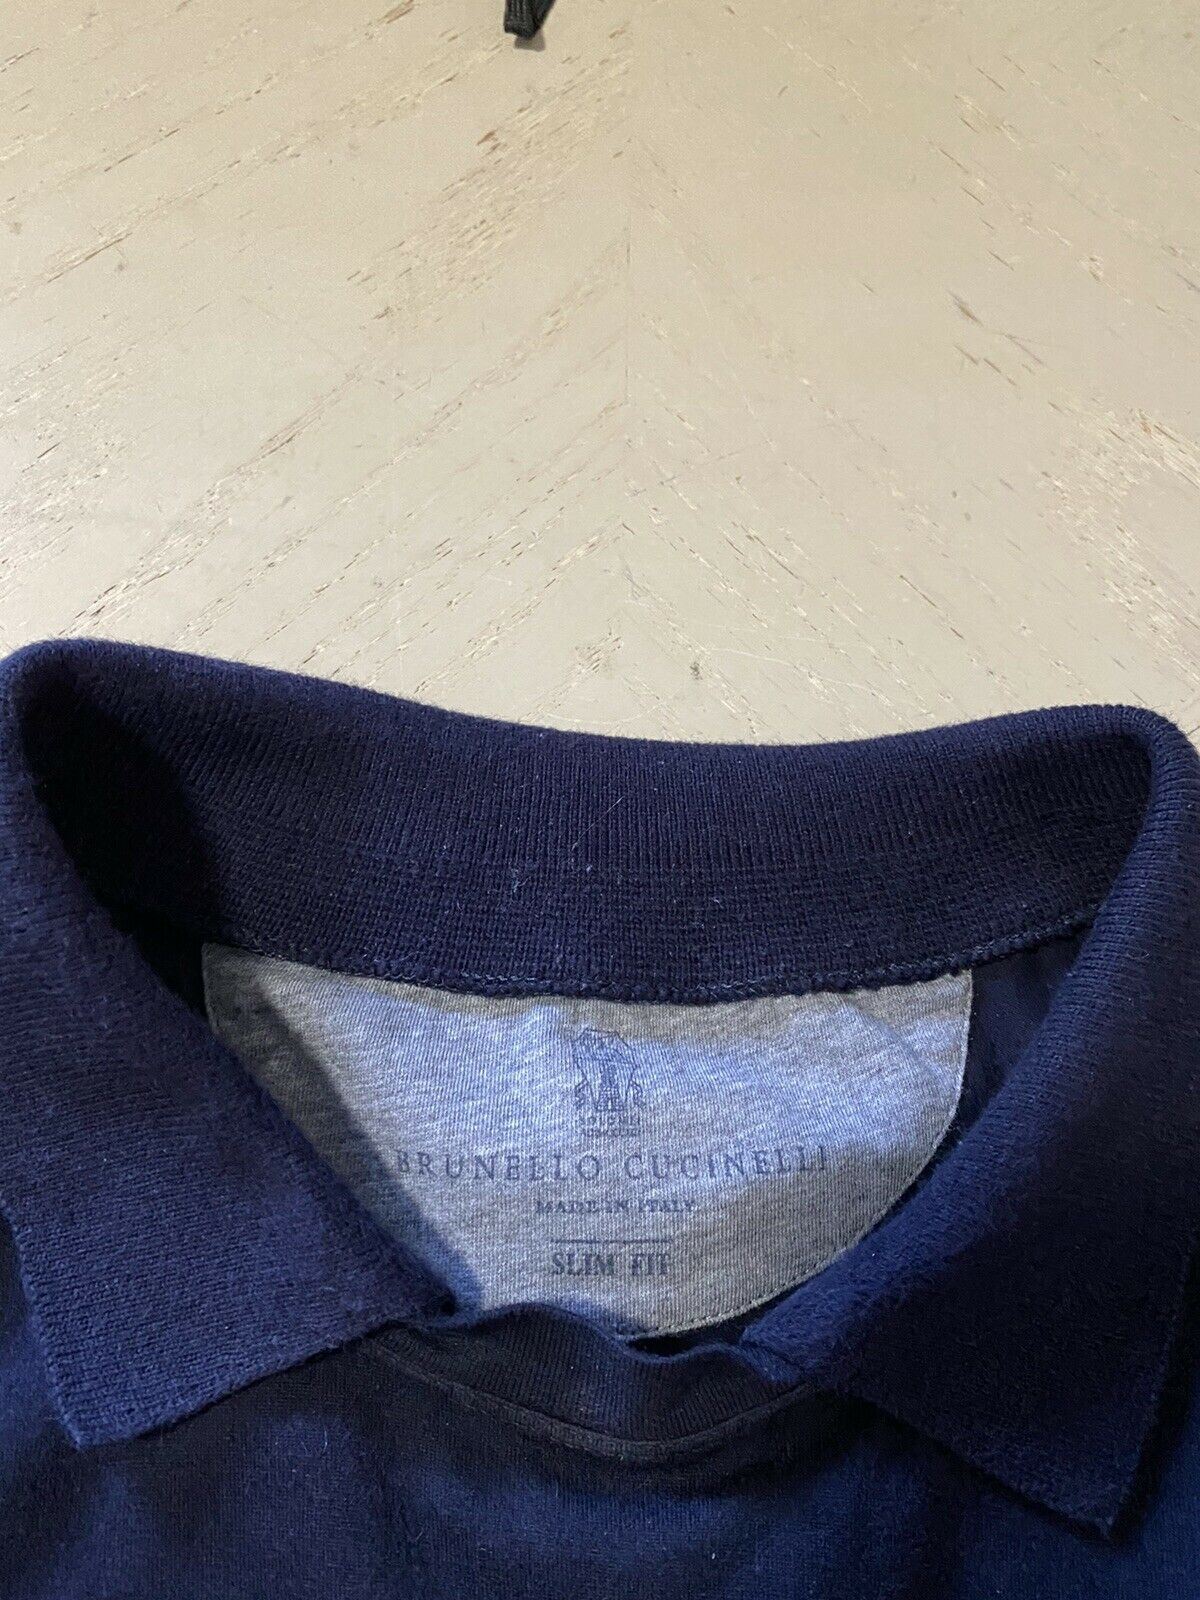 Мужская футболка узкого кроя темно-синего цвета Brunello Cucinelli, размер L, Италия, $595